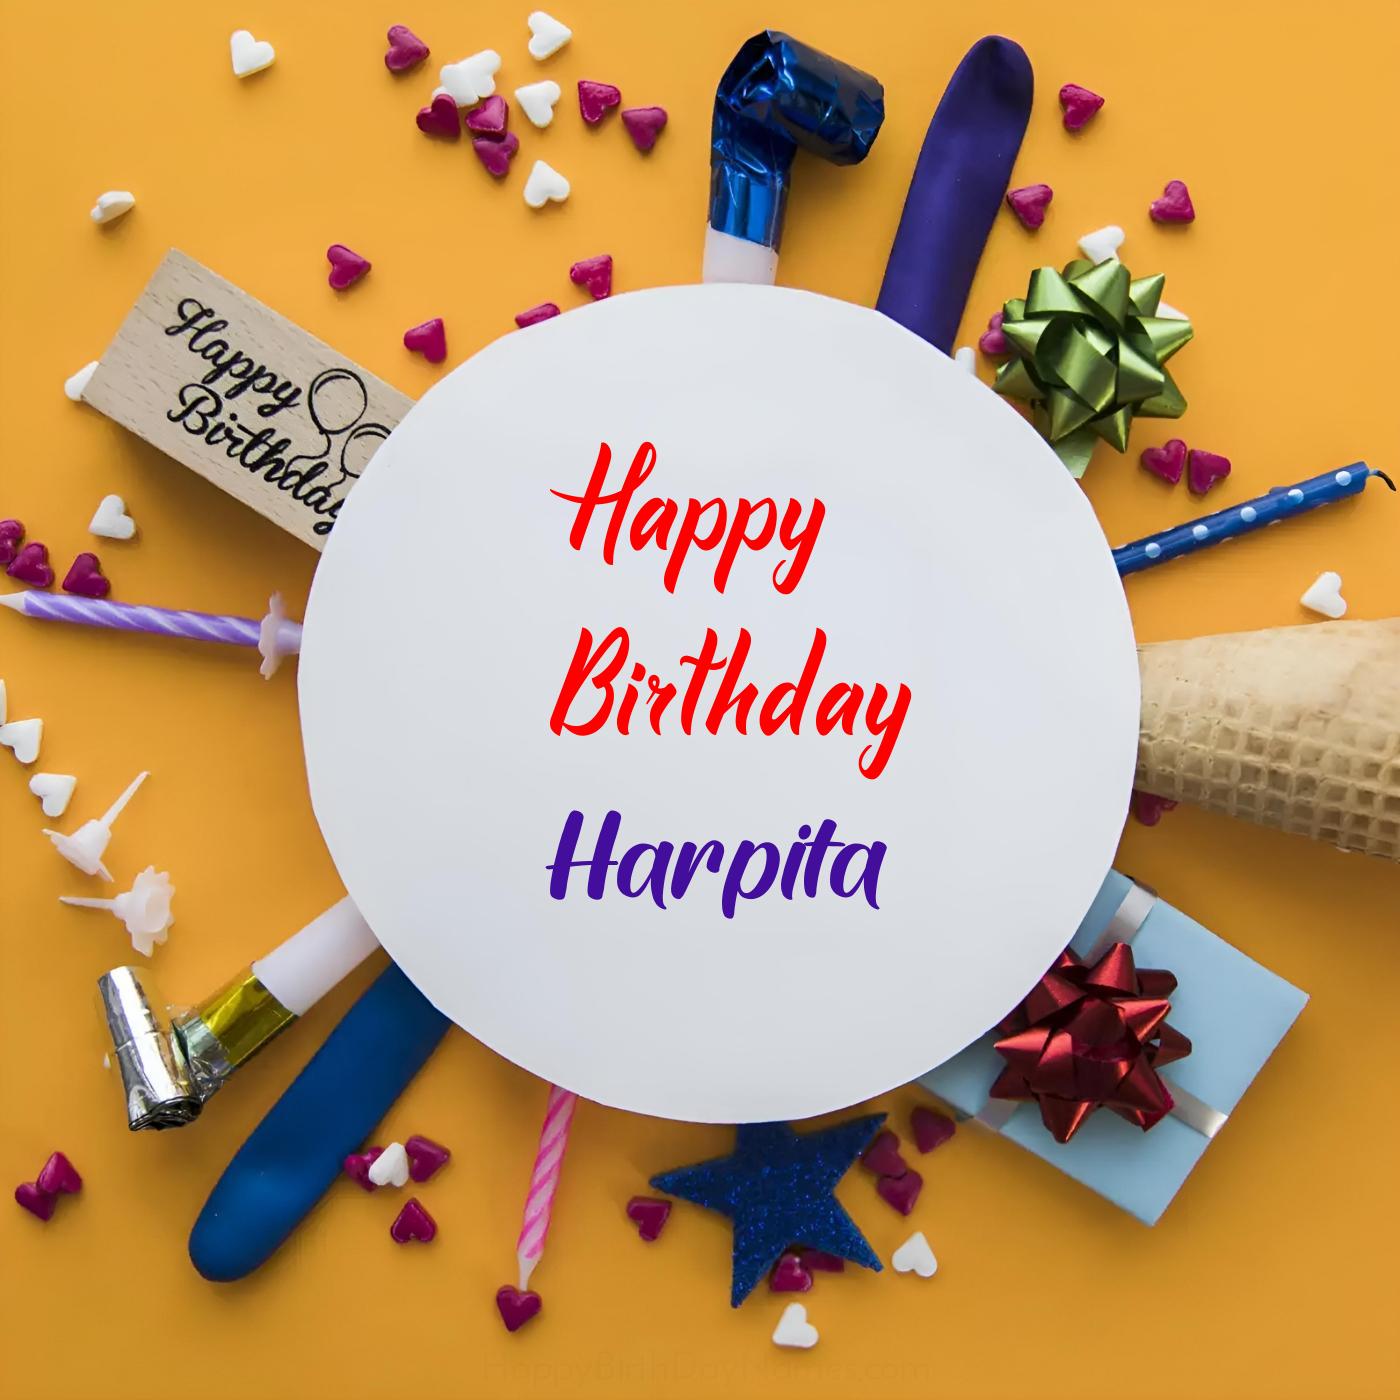 Happy Birthday Harpita Round Frame Card